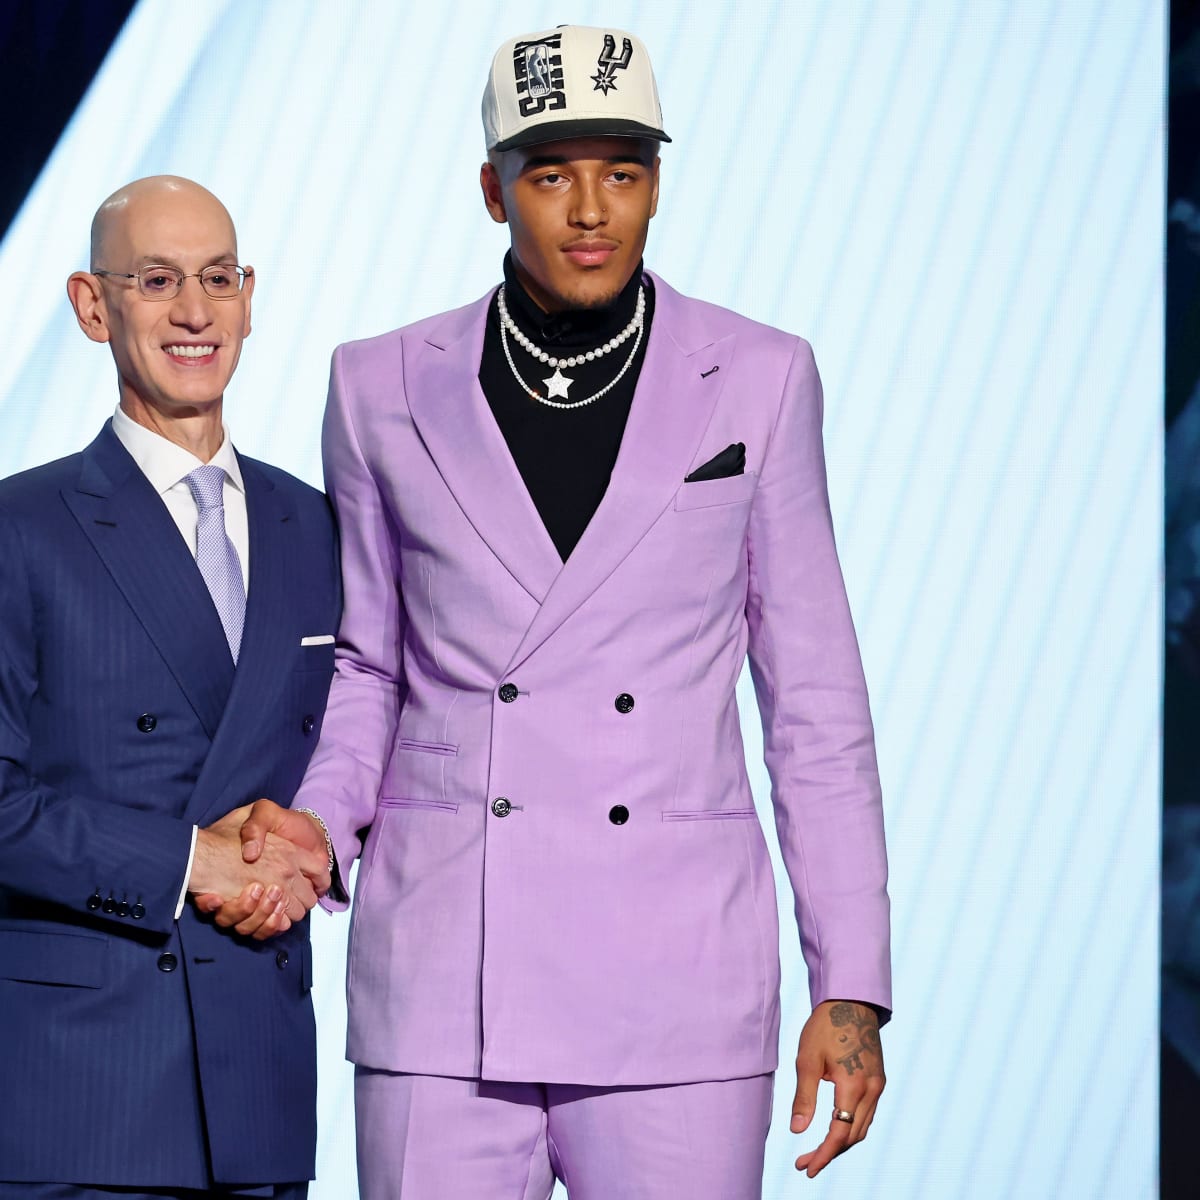 San Antonio Spurs Rookie Wears Nike Kobe 6 - Sports Illustrated FanNation  Kicks News, Analysis and More